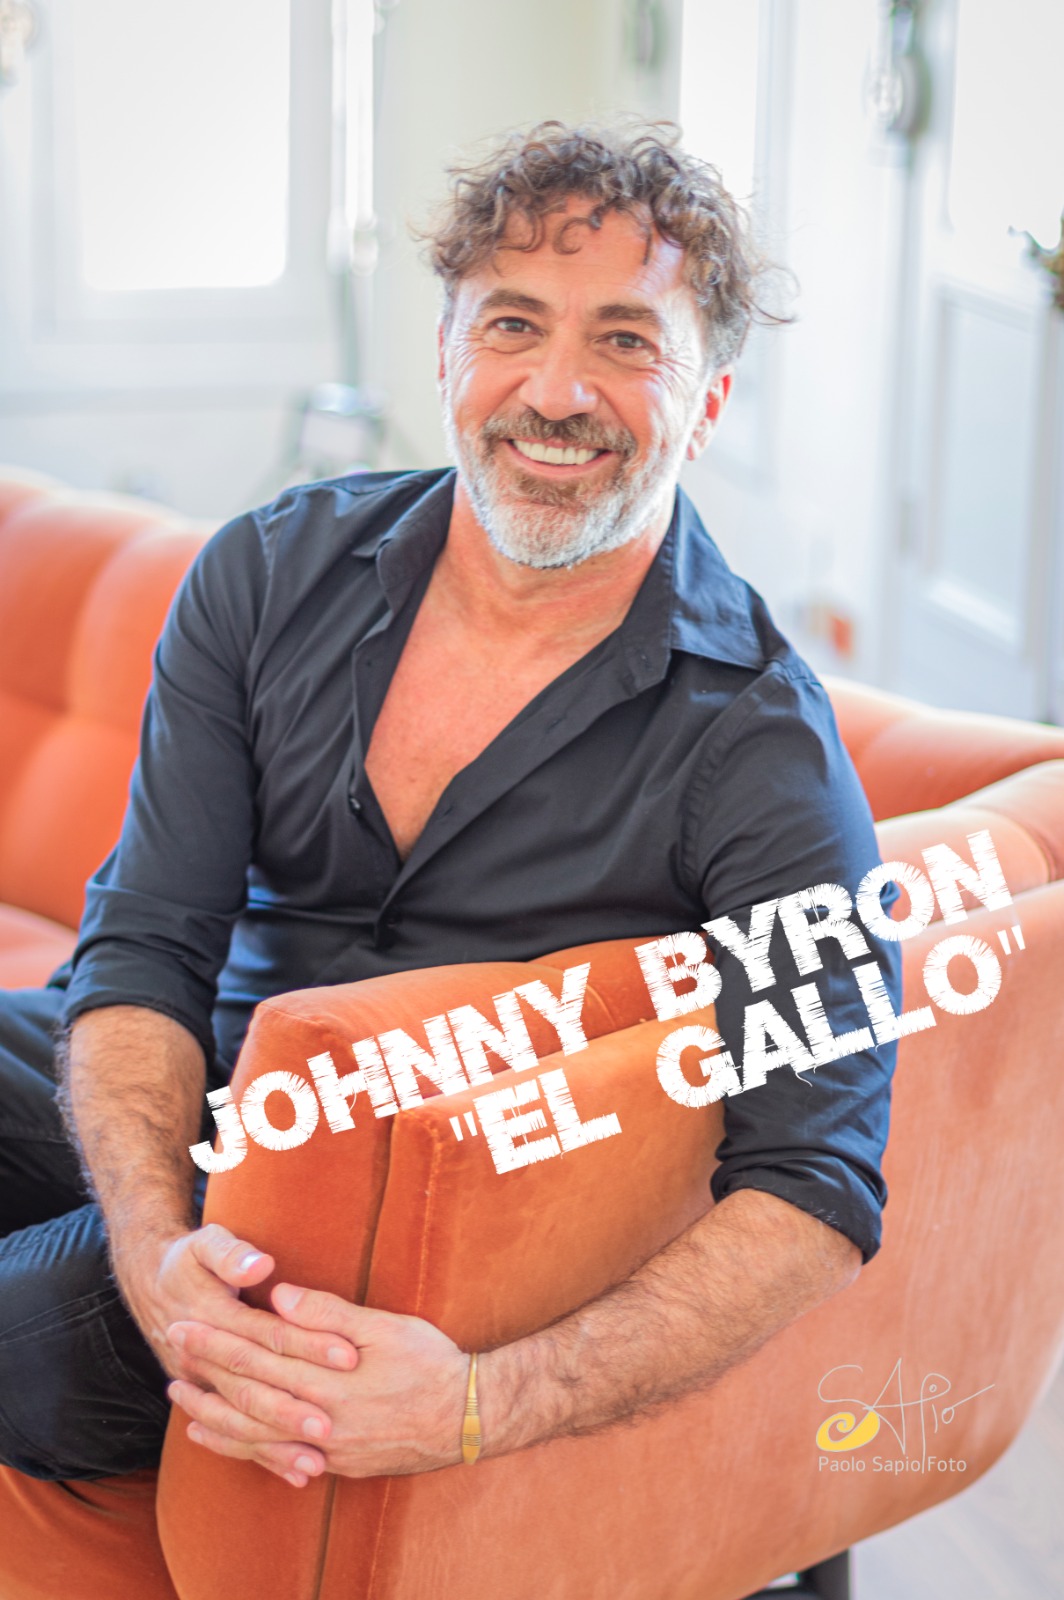 09.EL GALLO- JONHY BYRON- Jose V. Moirón jpg